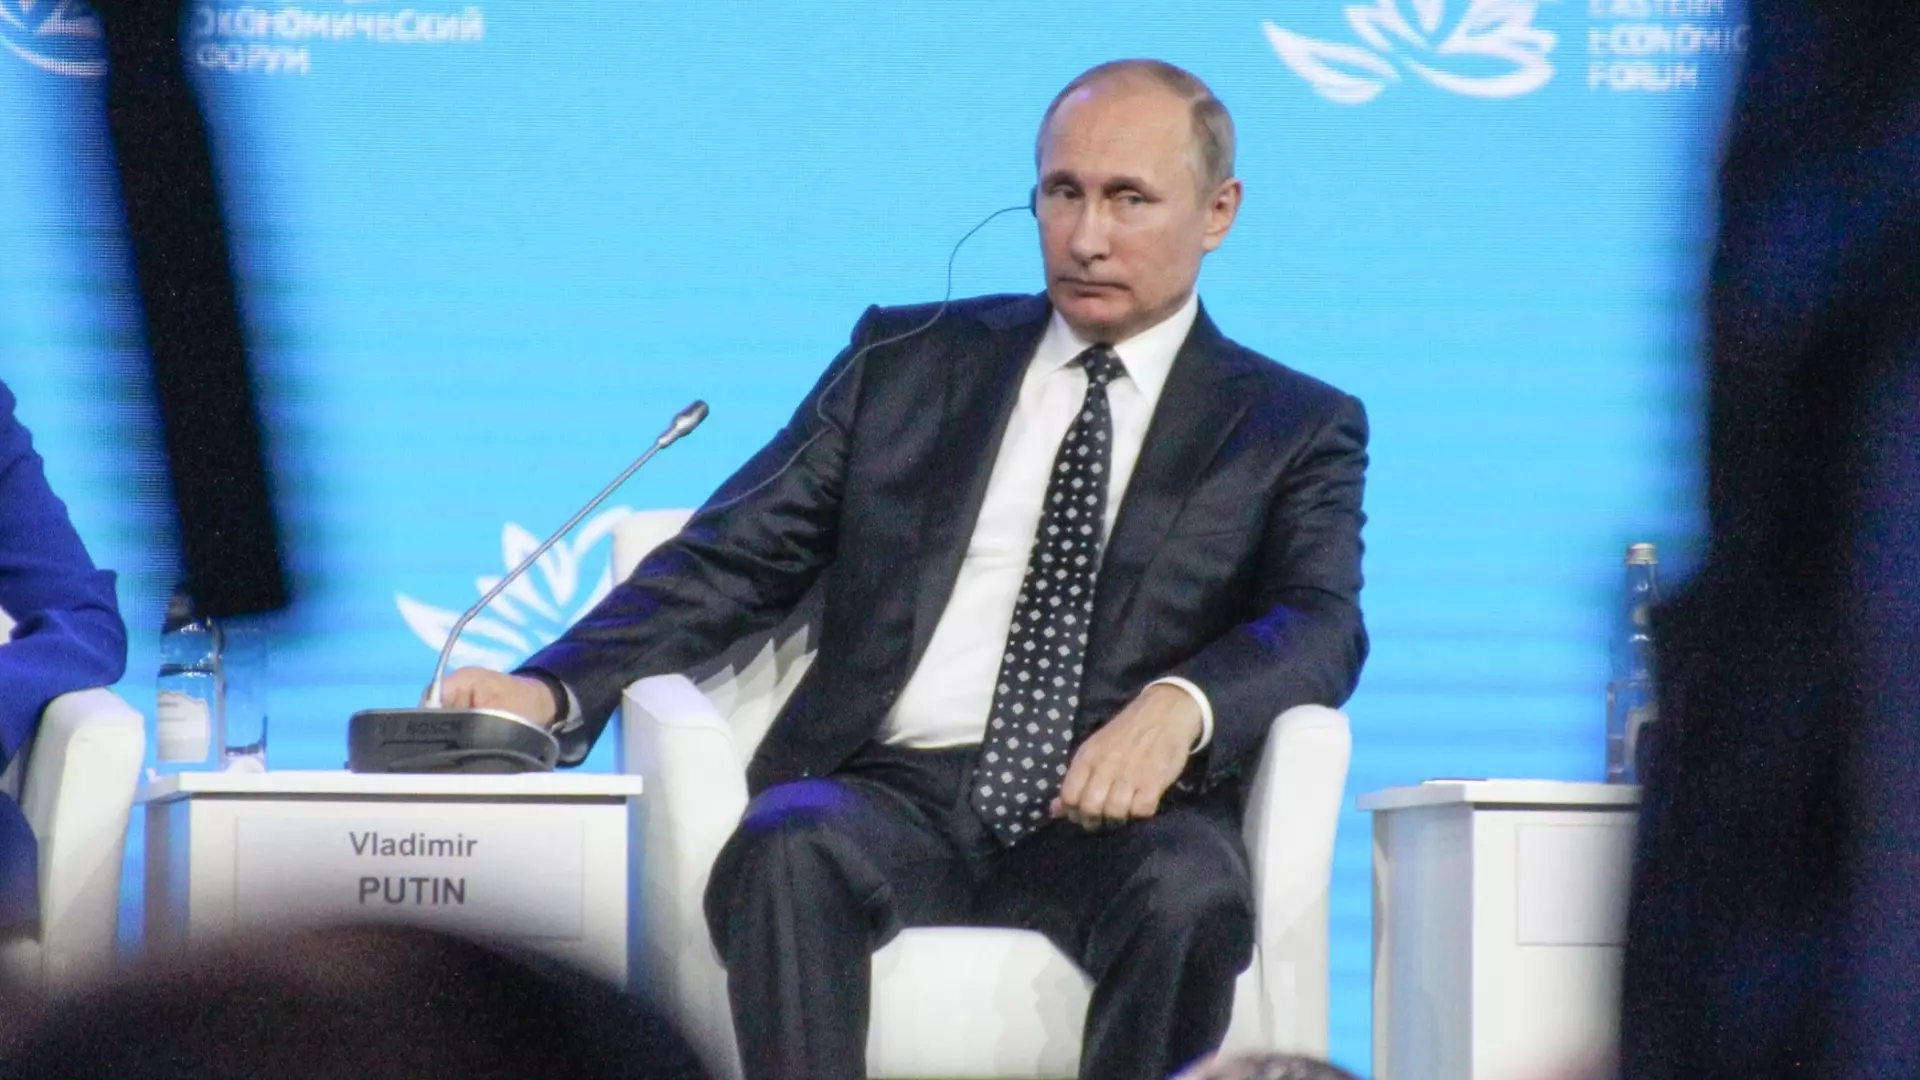 "Команда Путина" была создана в 2017 году